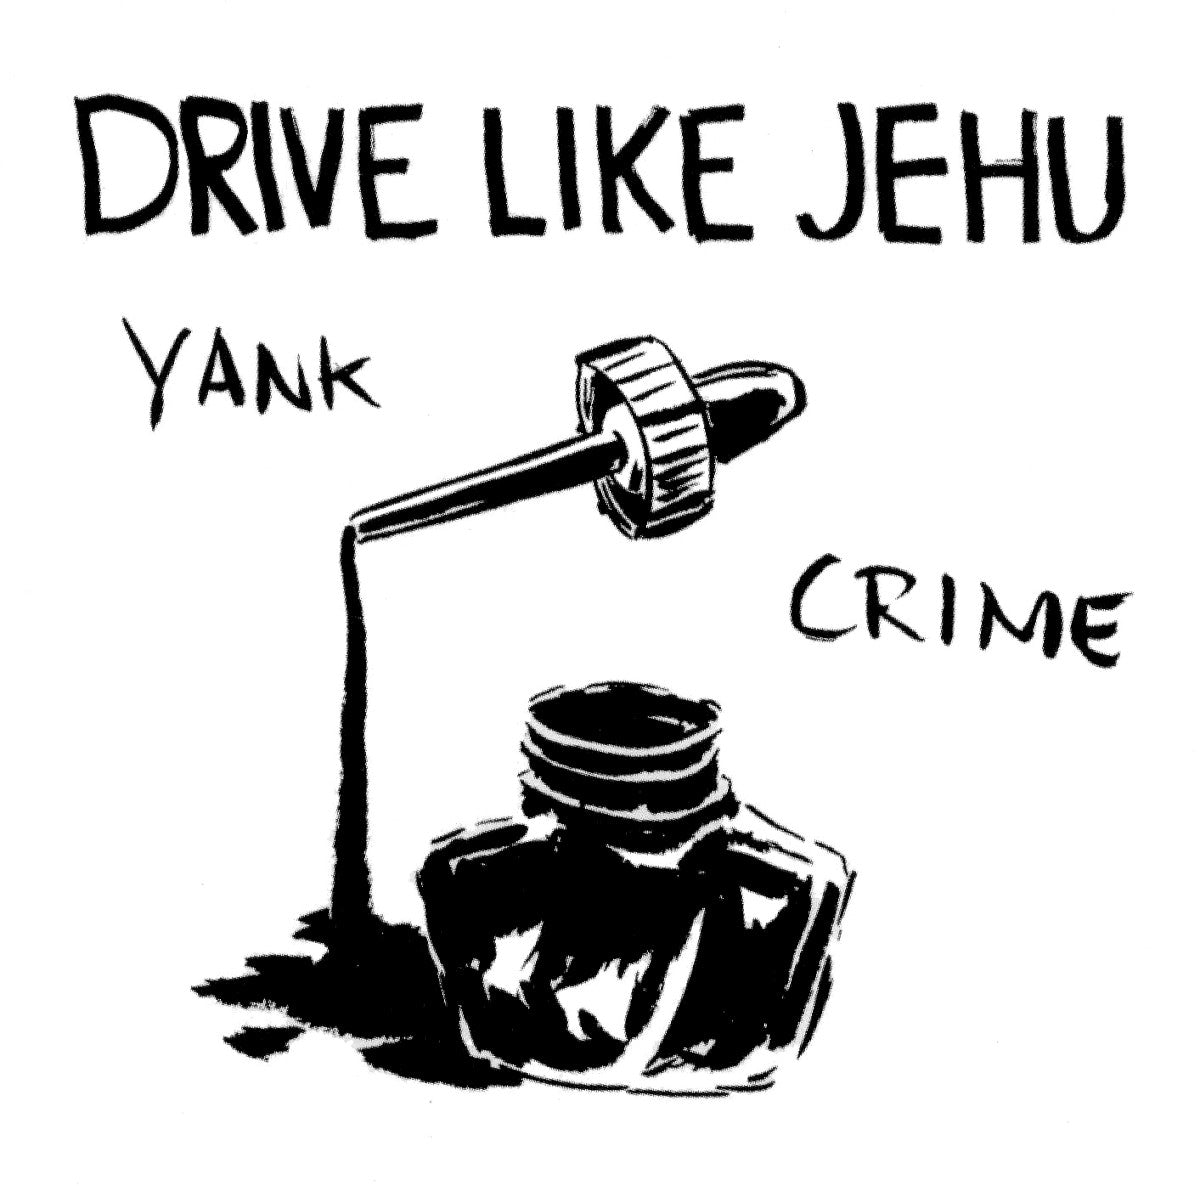 Drive Like Jehu: Yank Crime: Vinyl LP + 7" - Steadfast Records